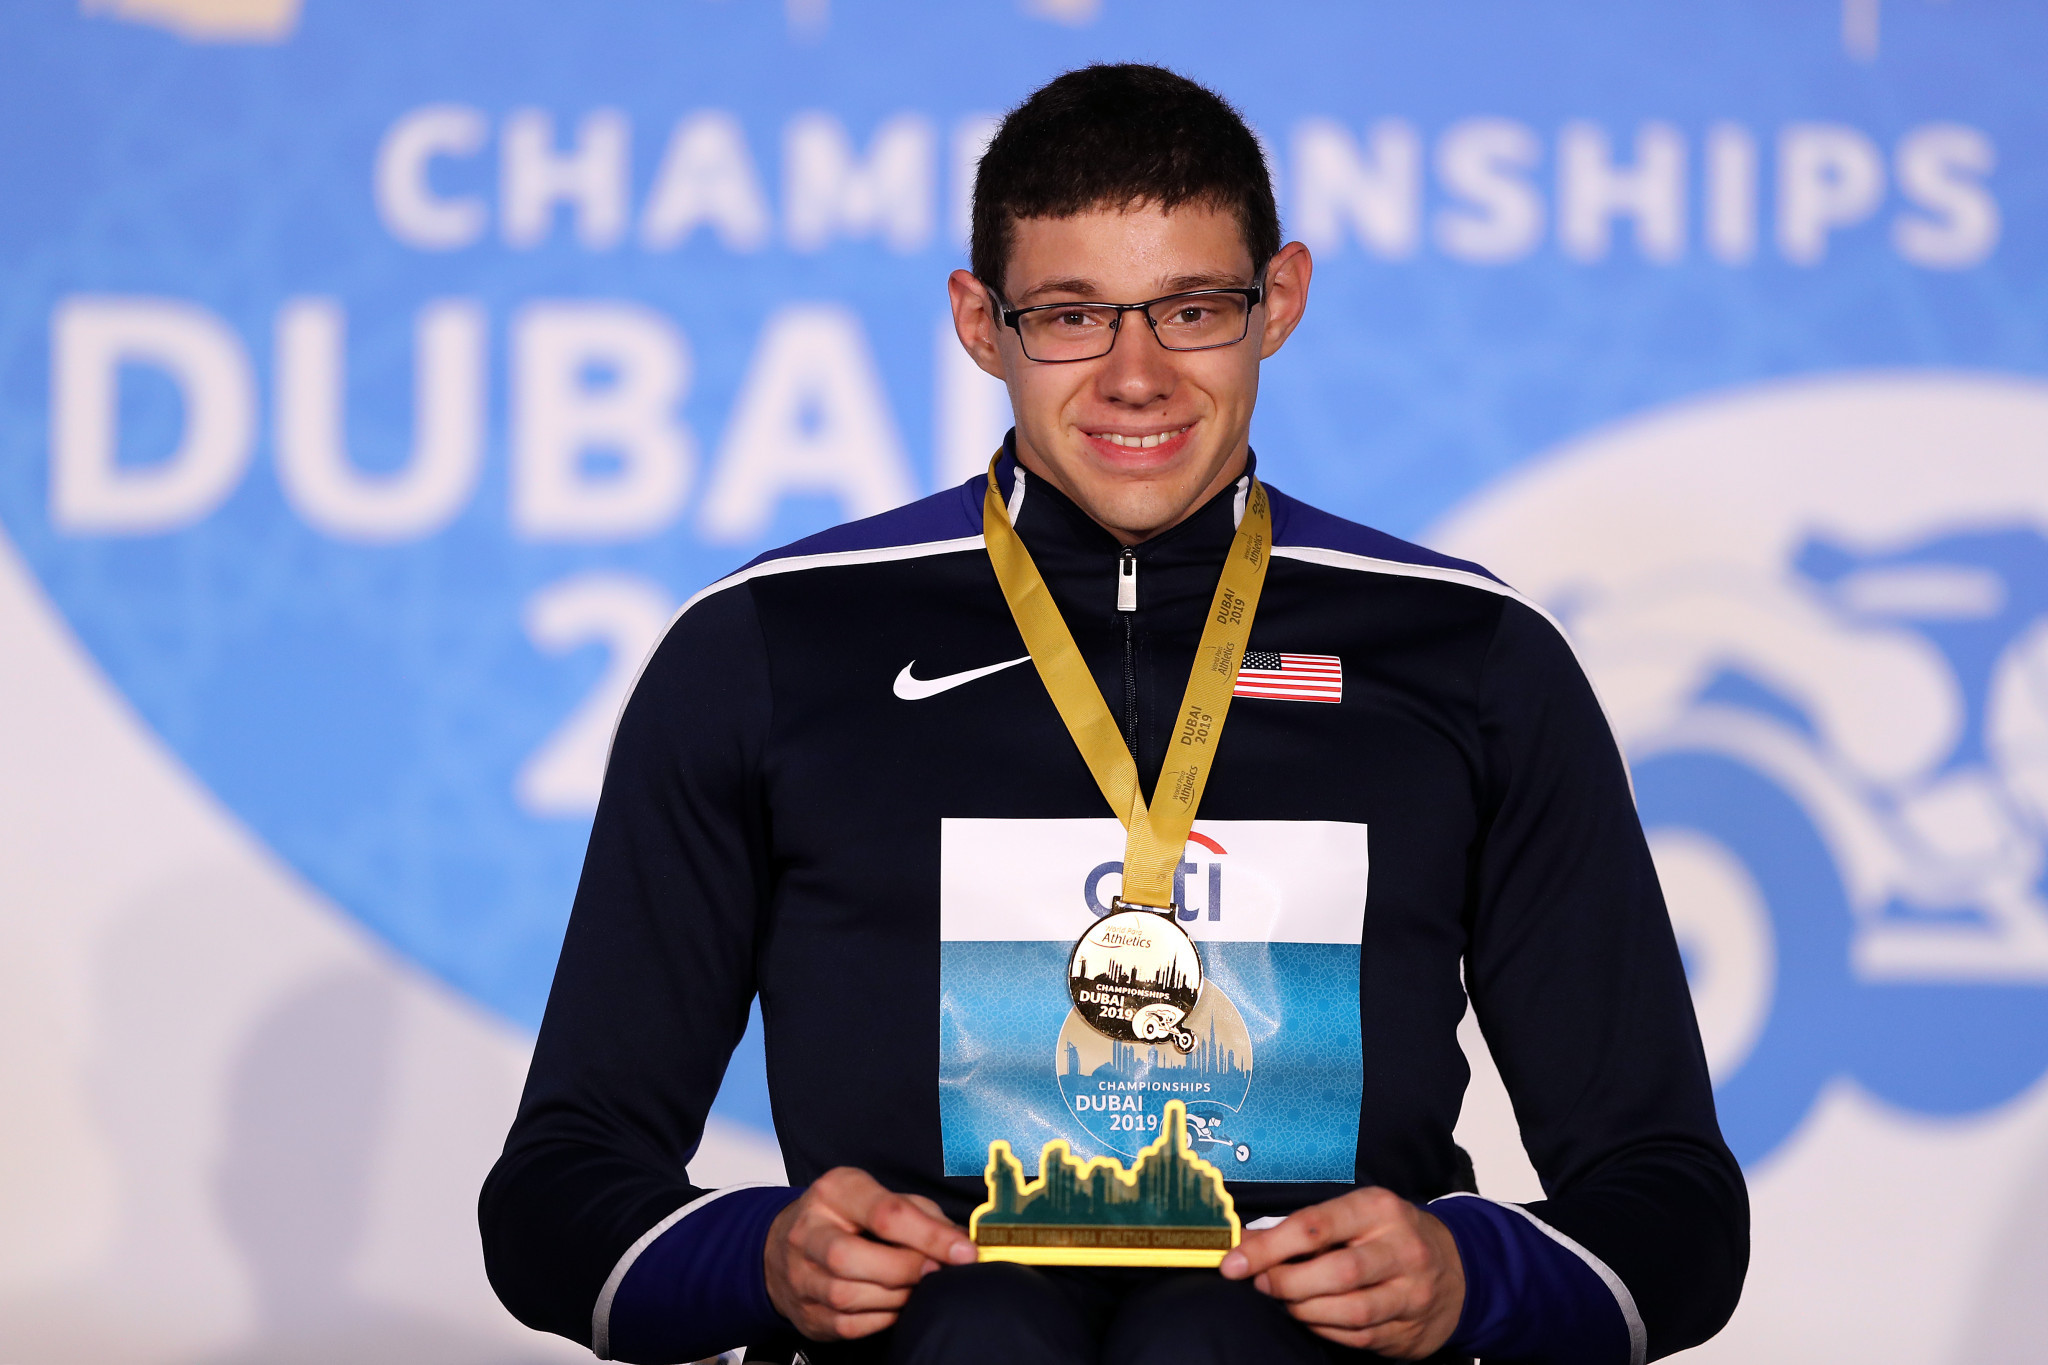 Daniel Romanchuk celebrated 800m victory in Dubai ©Getty Images